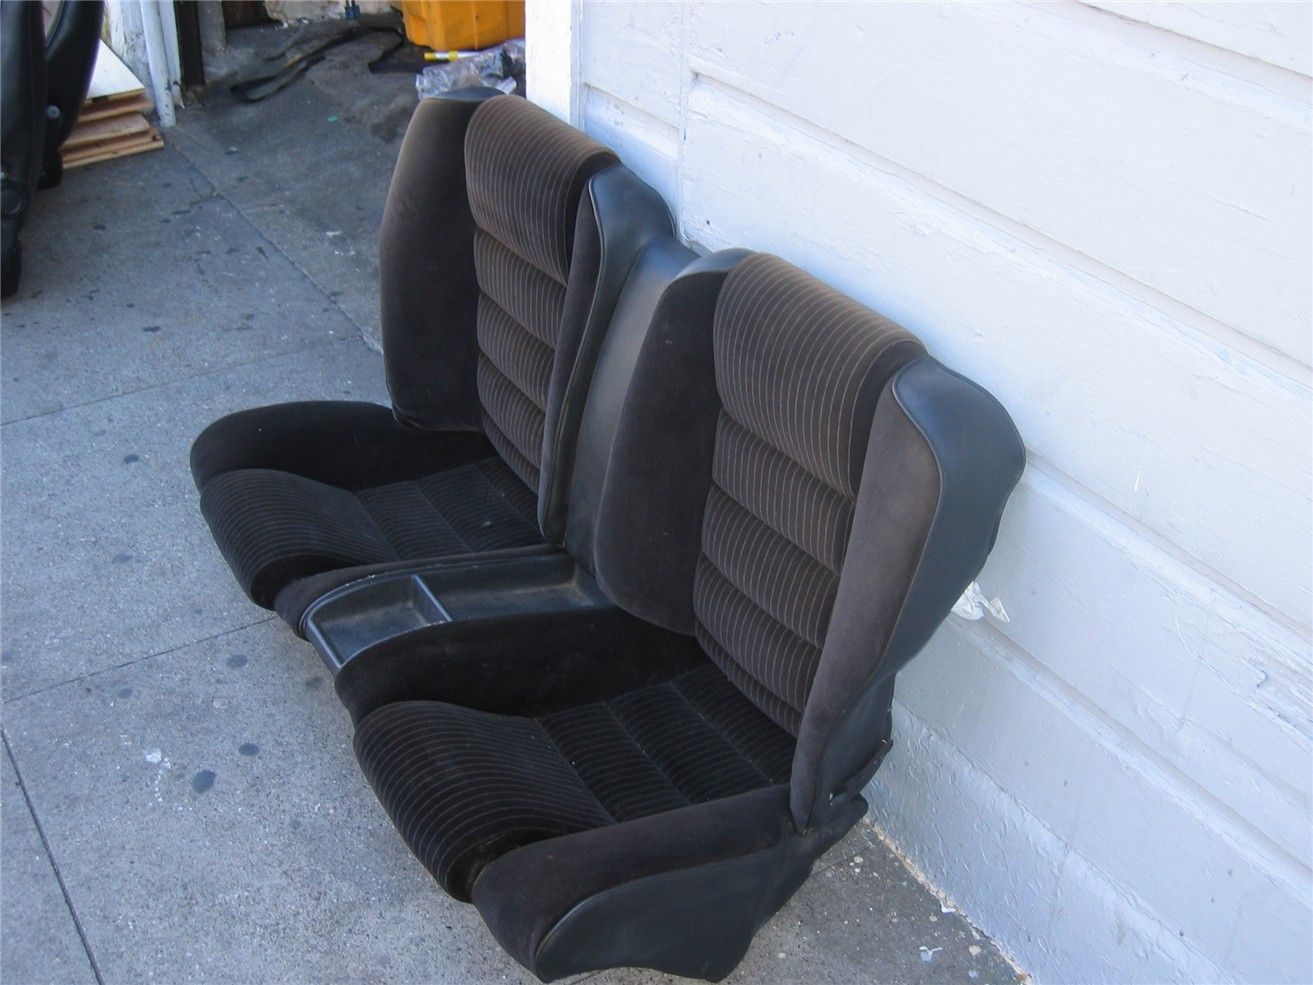 85 GTV6 Front Seats-before restore #2.jpg